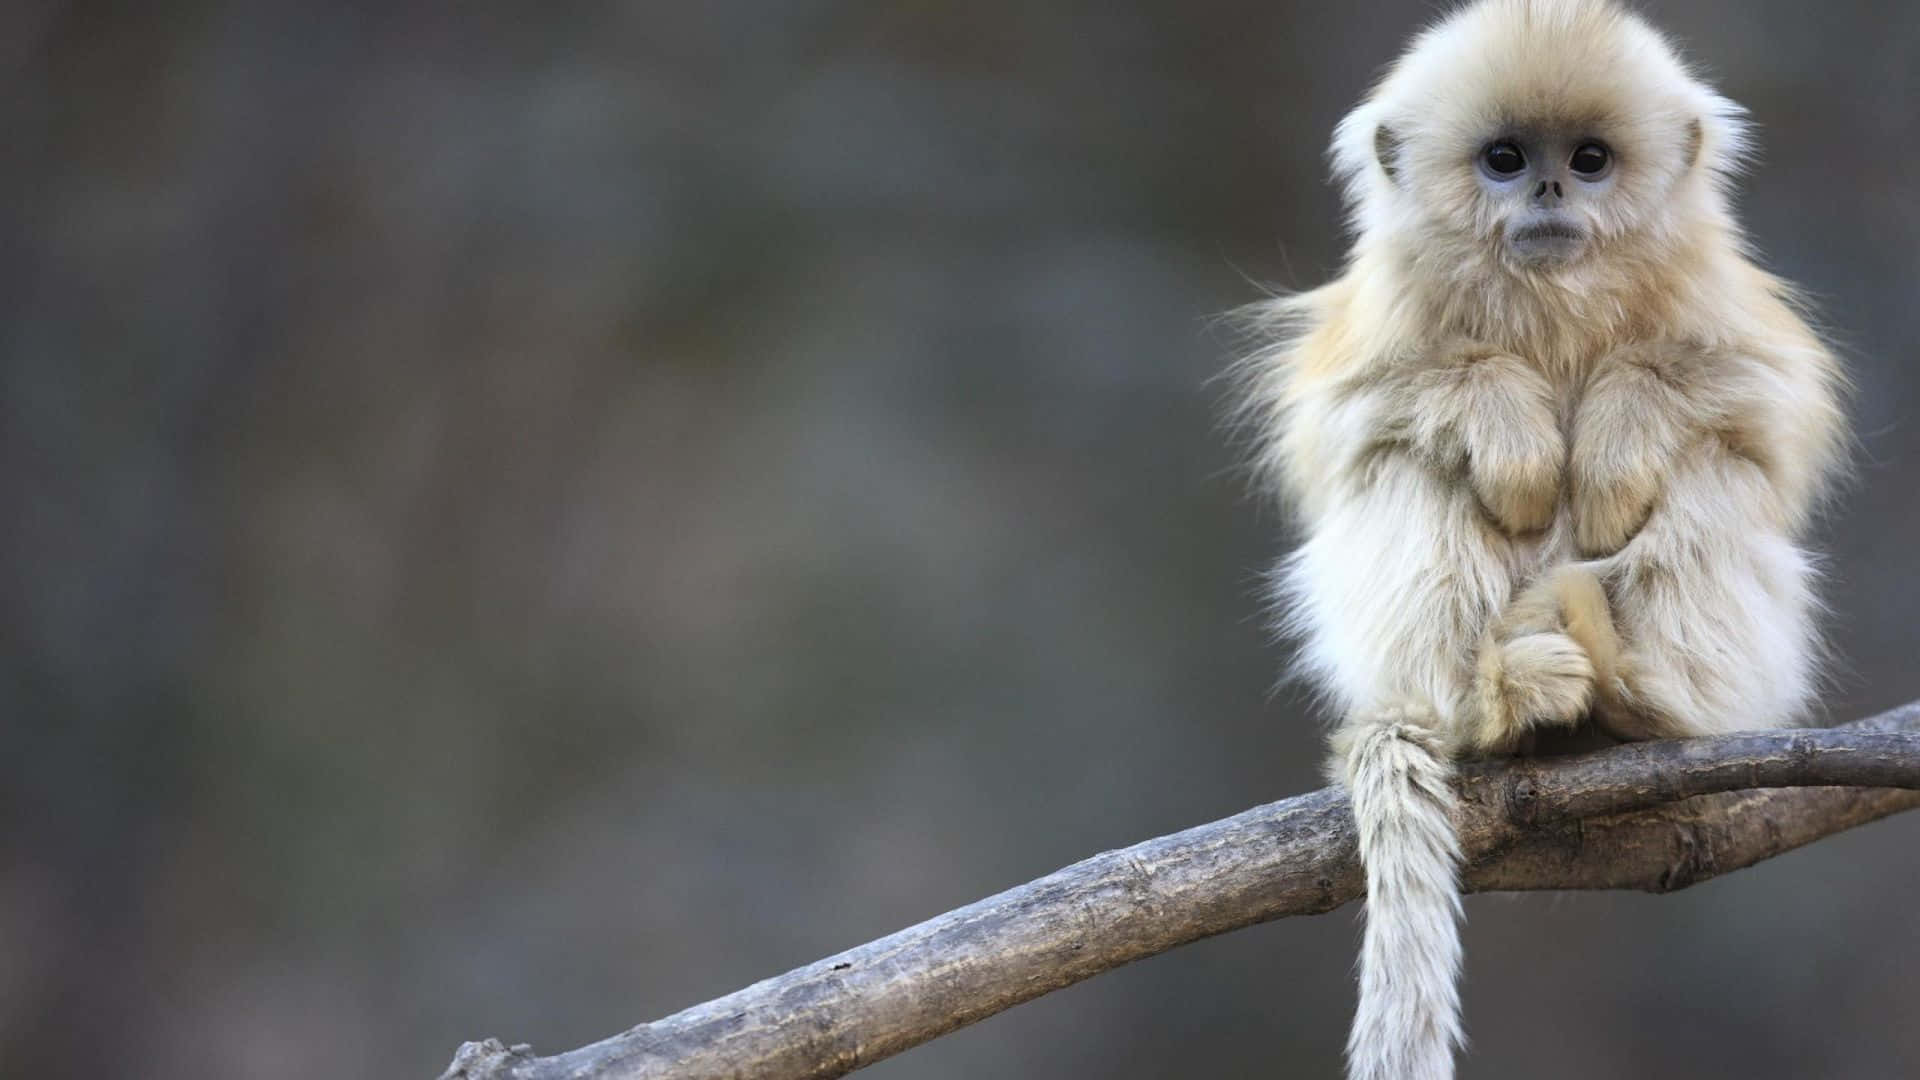 A 1080p Gibbon Sitting On A Branch